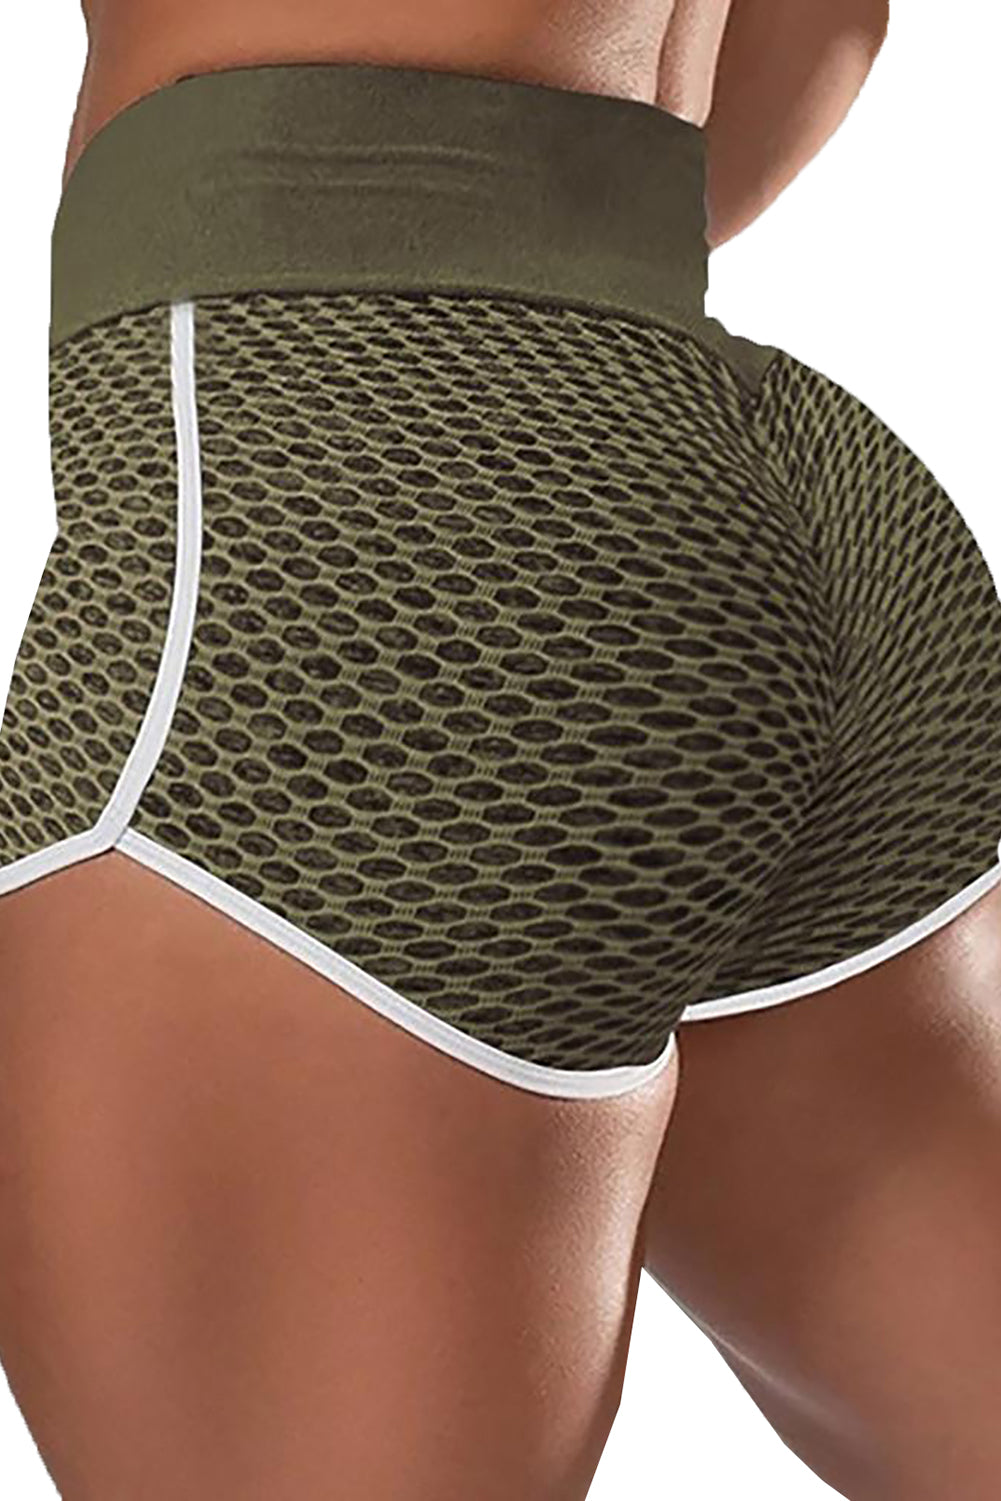 Hot Yoga Shorts With Contrast Waistband  Yoga shorts hot, Yoga shorts, Hot  yoga